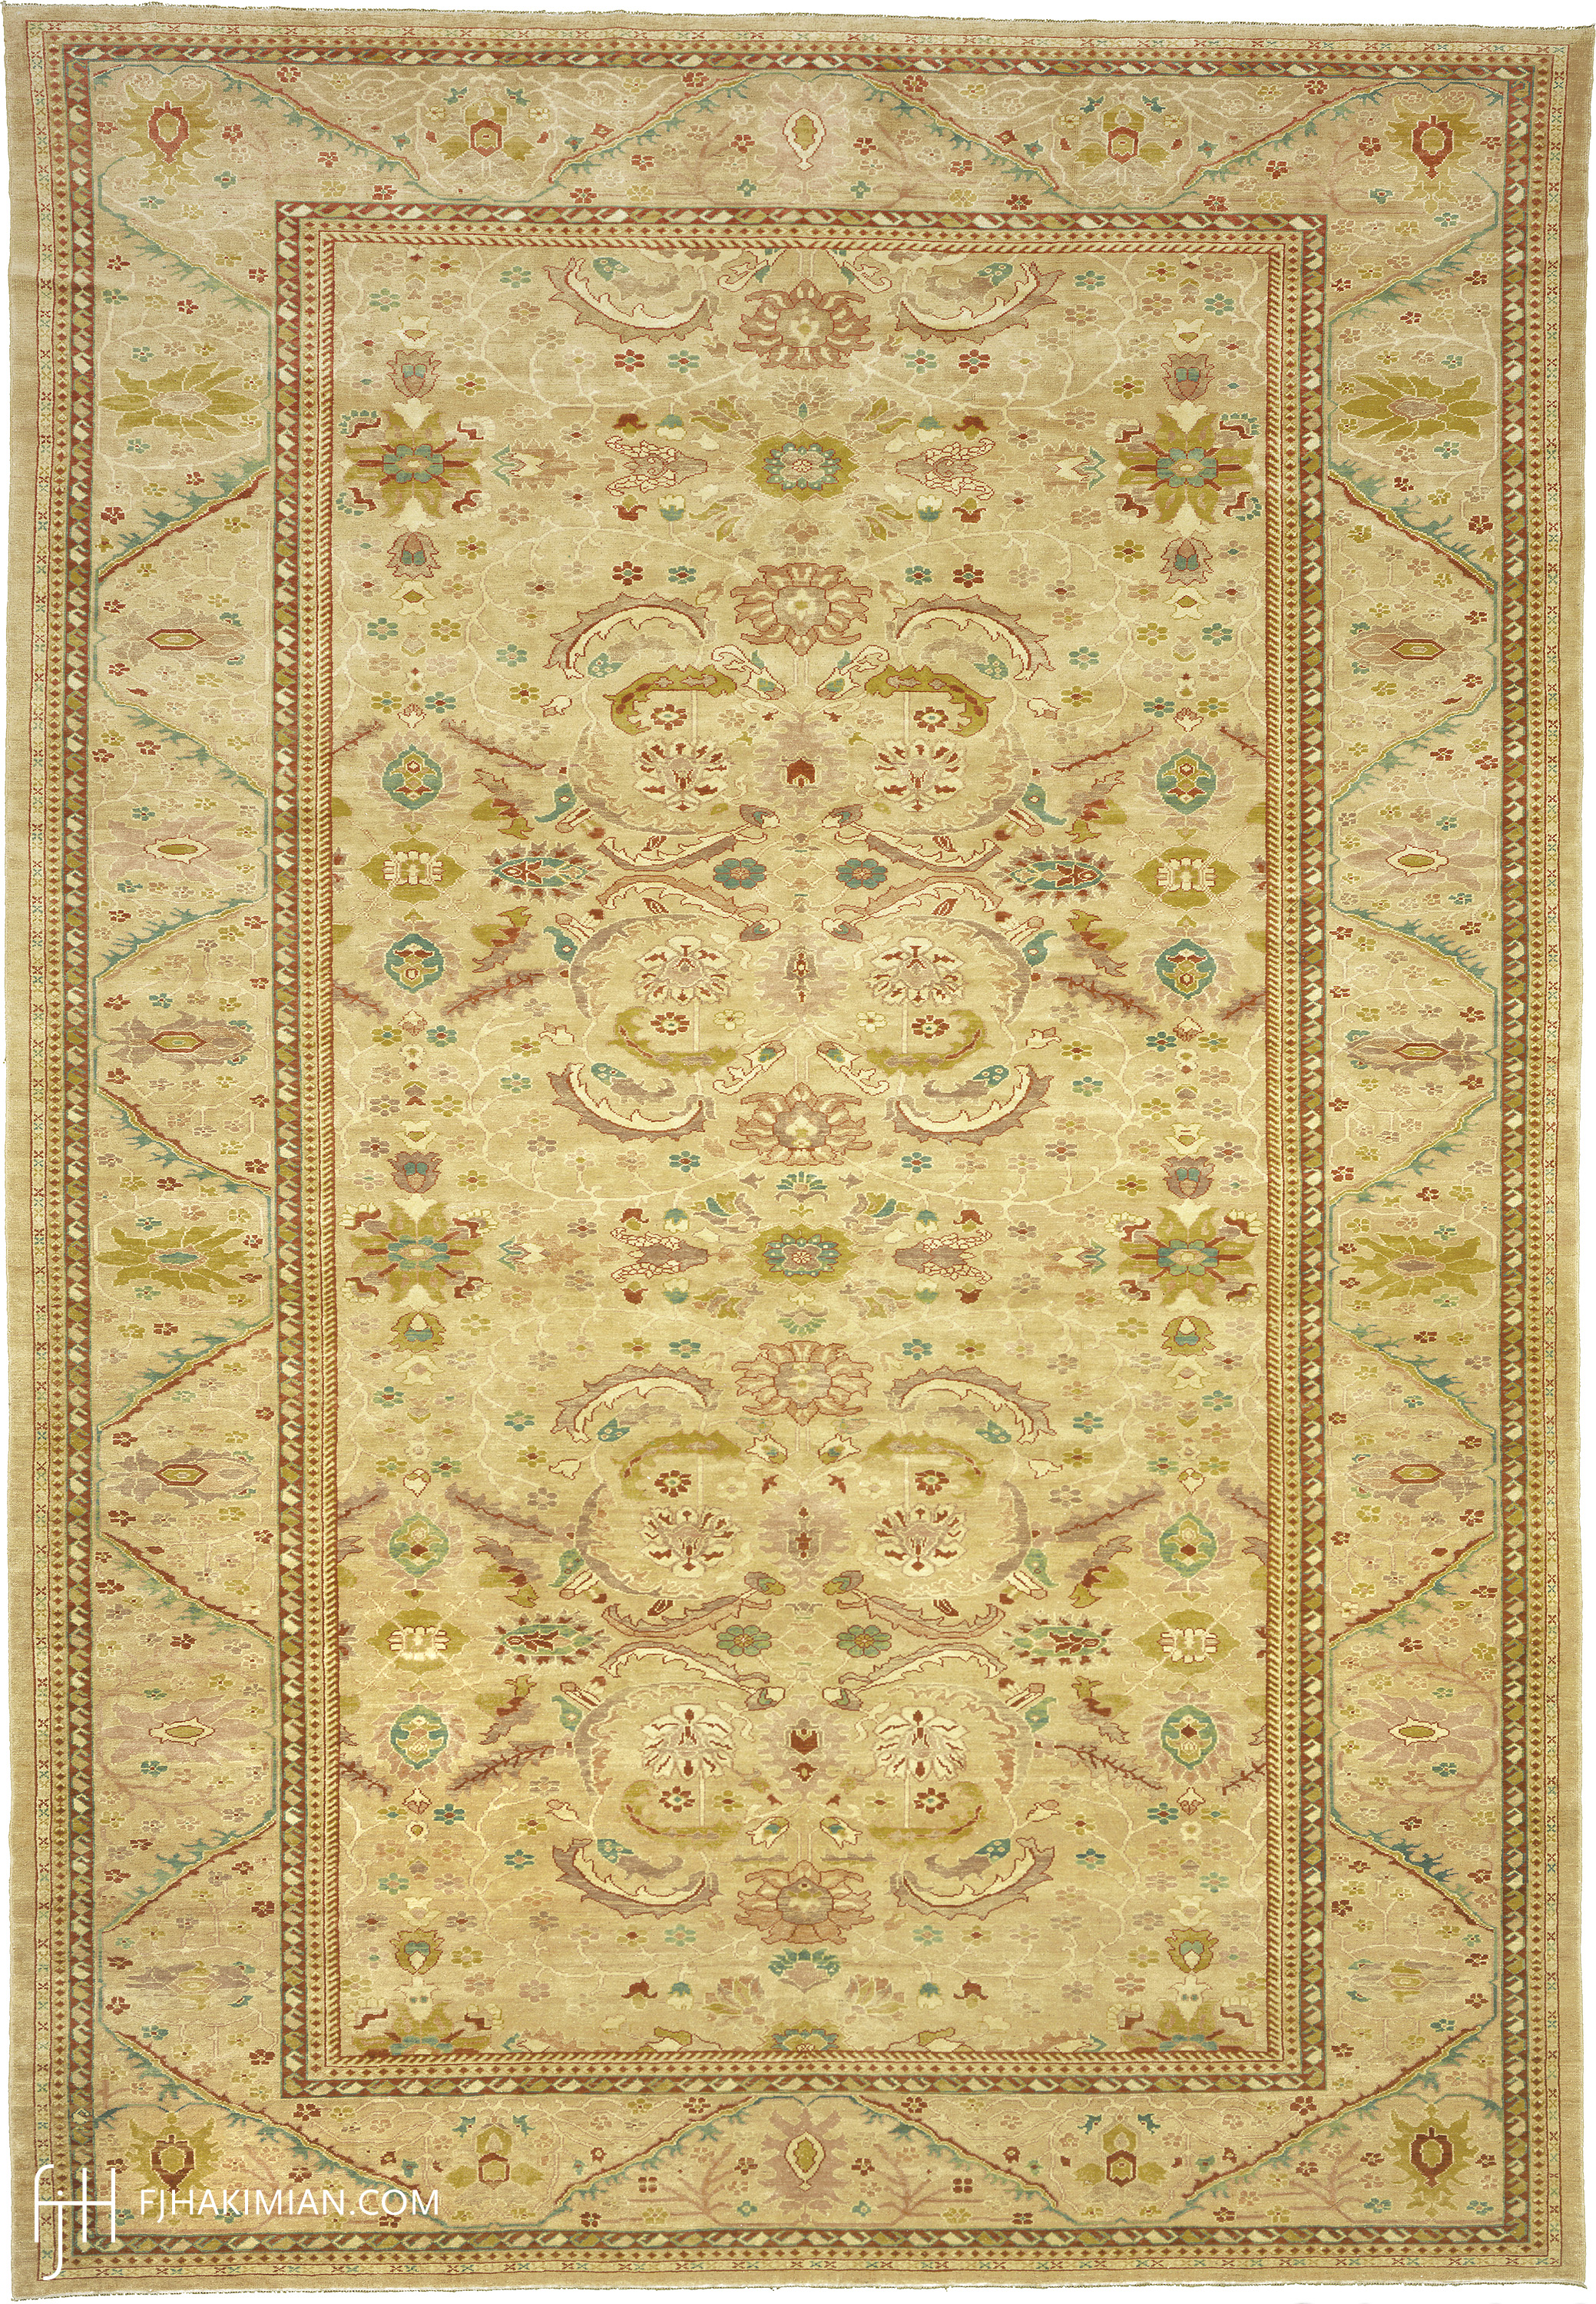 Custom Sultanabad Design | FJ Hakimian | Carpet Gallery in NY